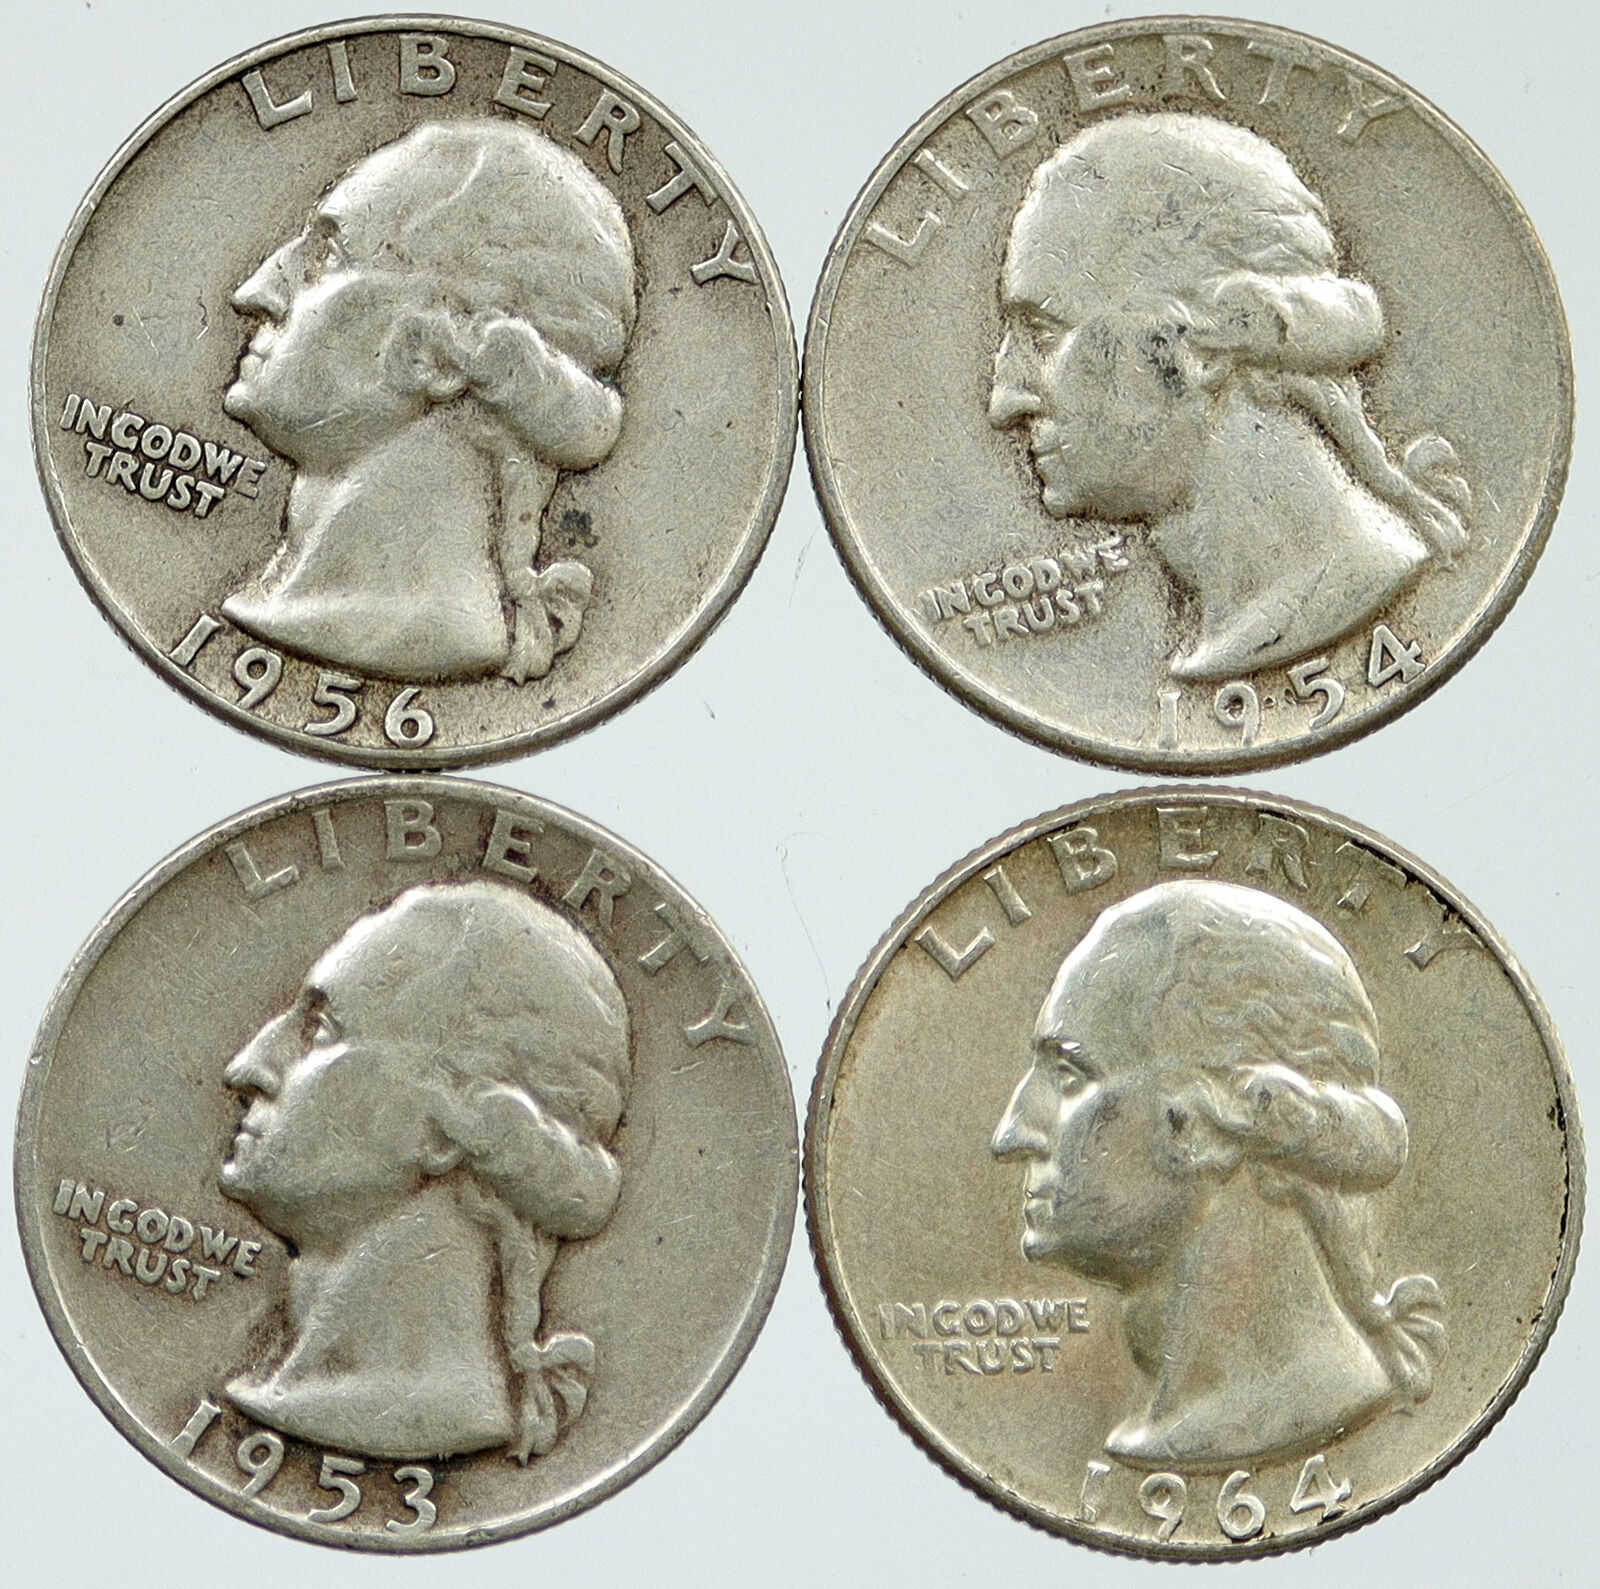 UNITED STATES USA President Washington Silver Lot of 4 Quarters Coins i116187